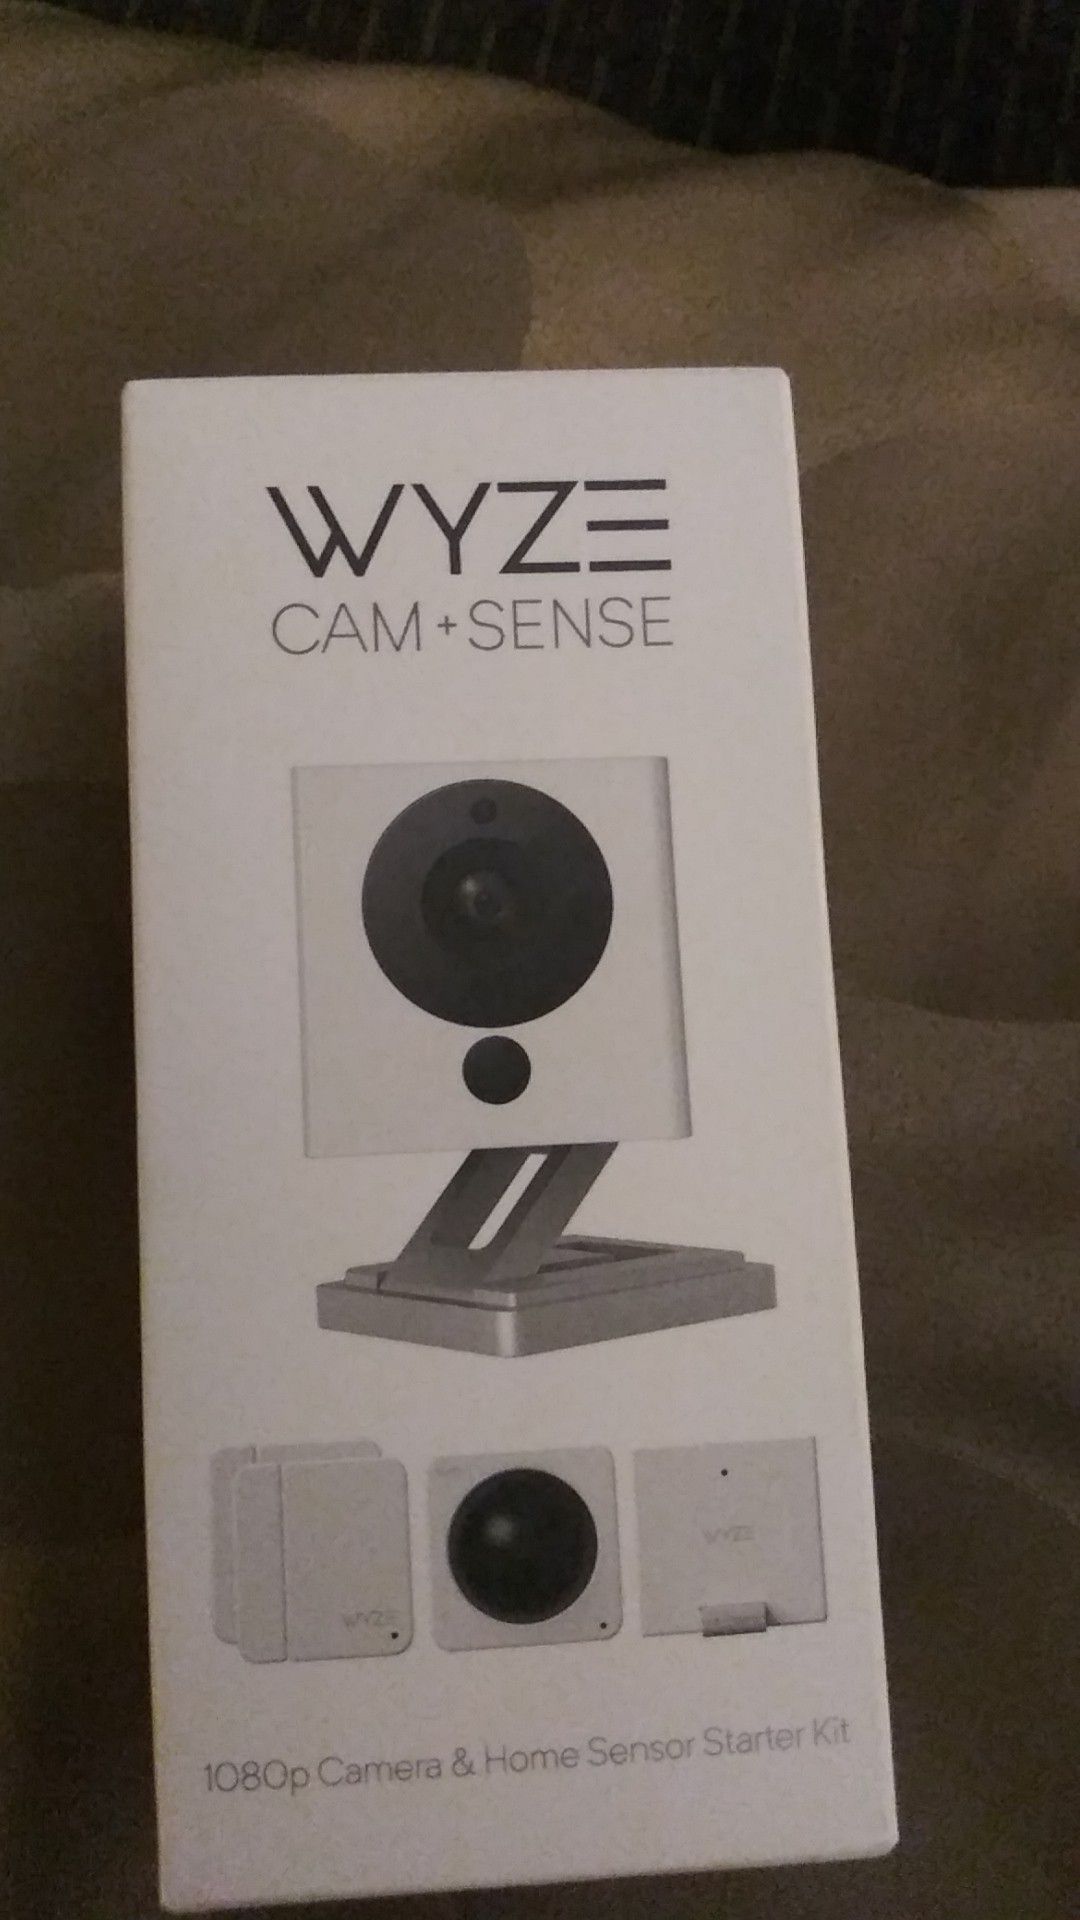 Wyze cam 1+sense. 1080p camera&home sensor starter kit. Brand new. Never been opened. 35$